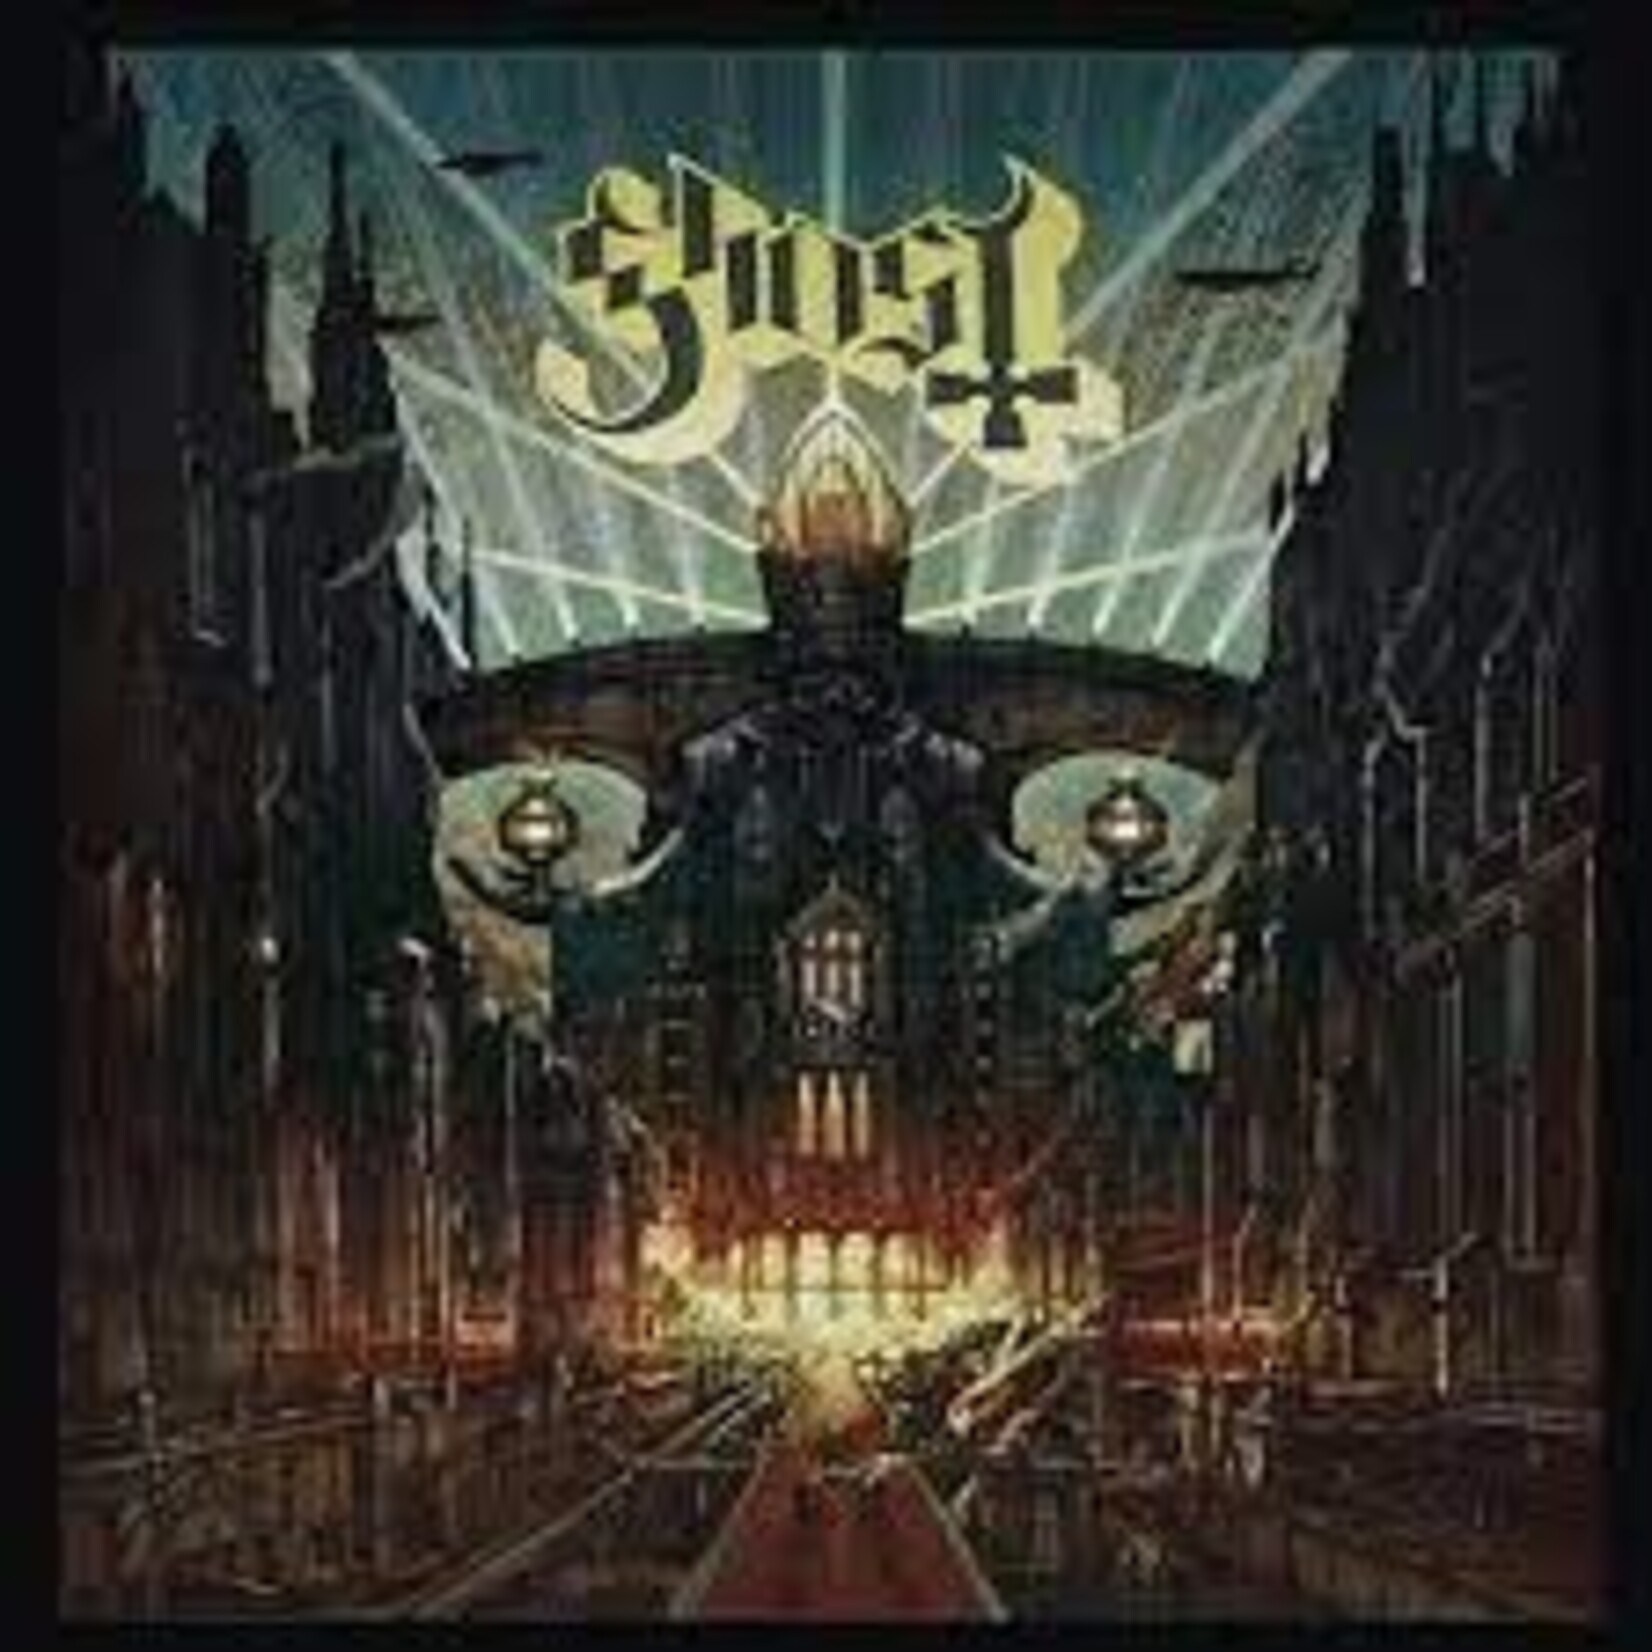 [New] Ghost B.C - Meliora/Popestar (2LP, blue smoke vinyl)